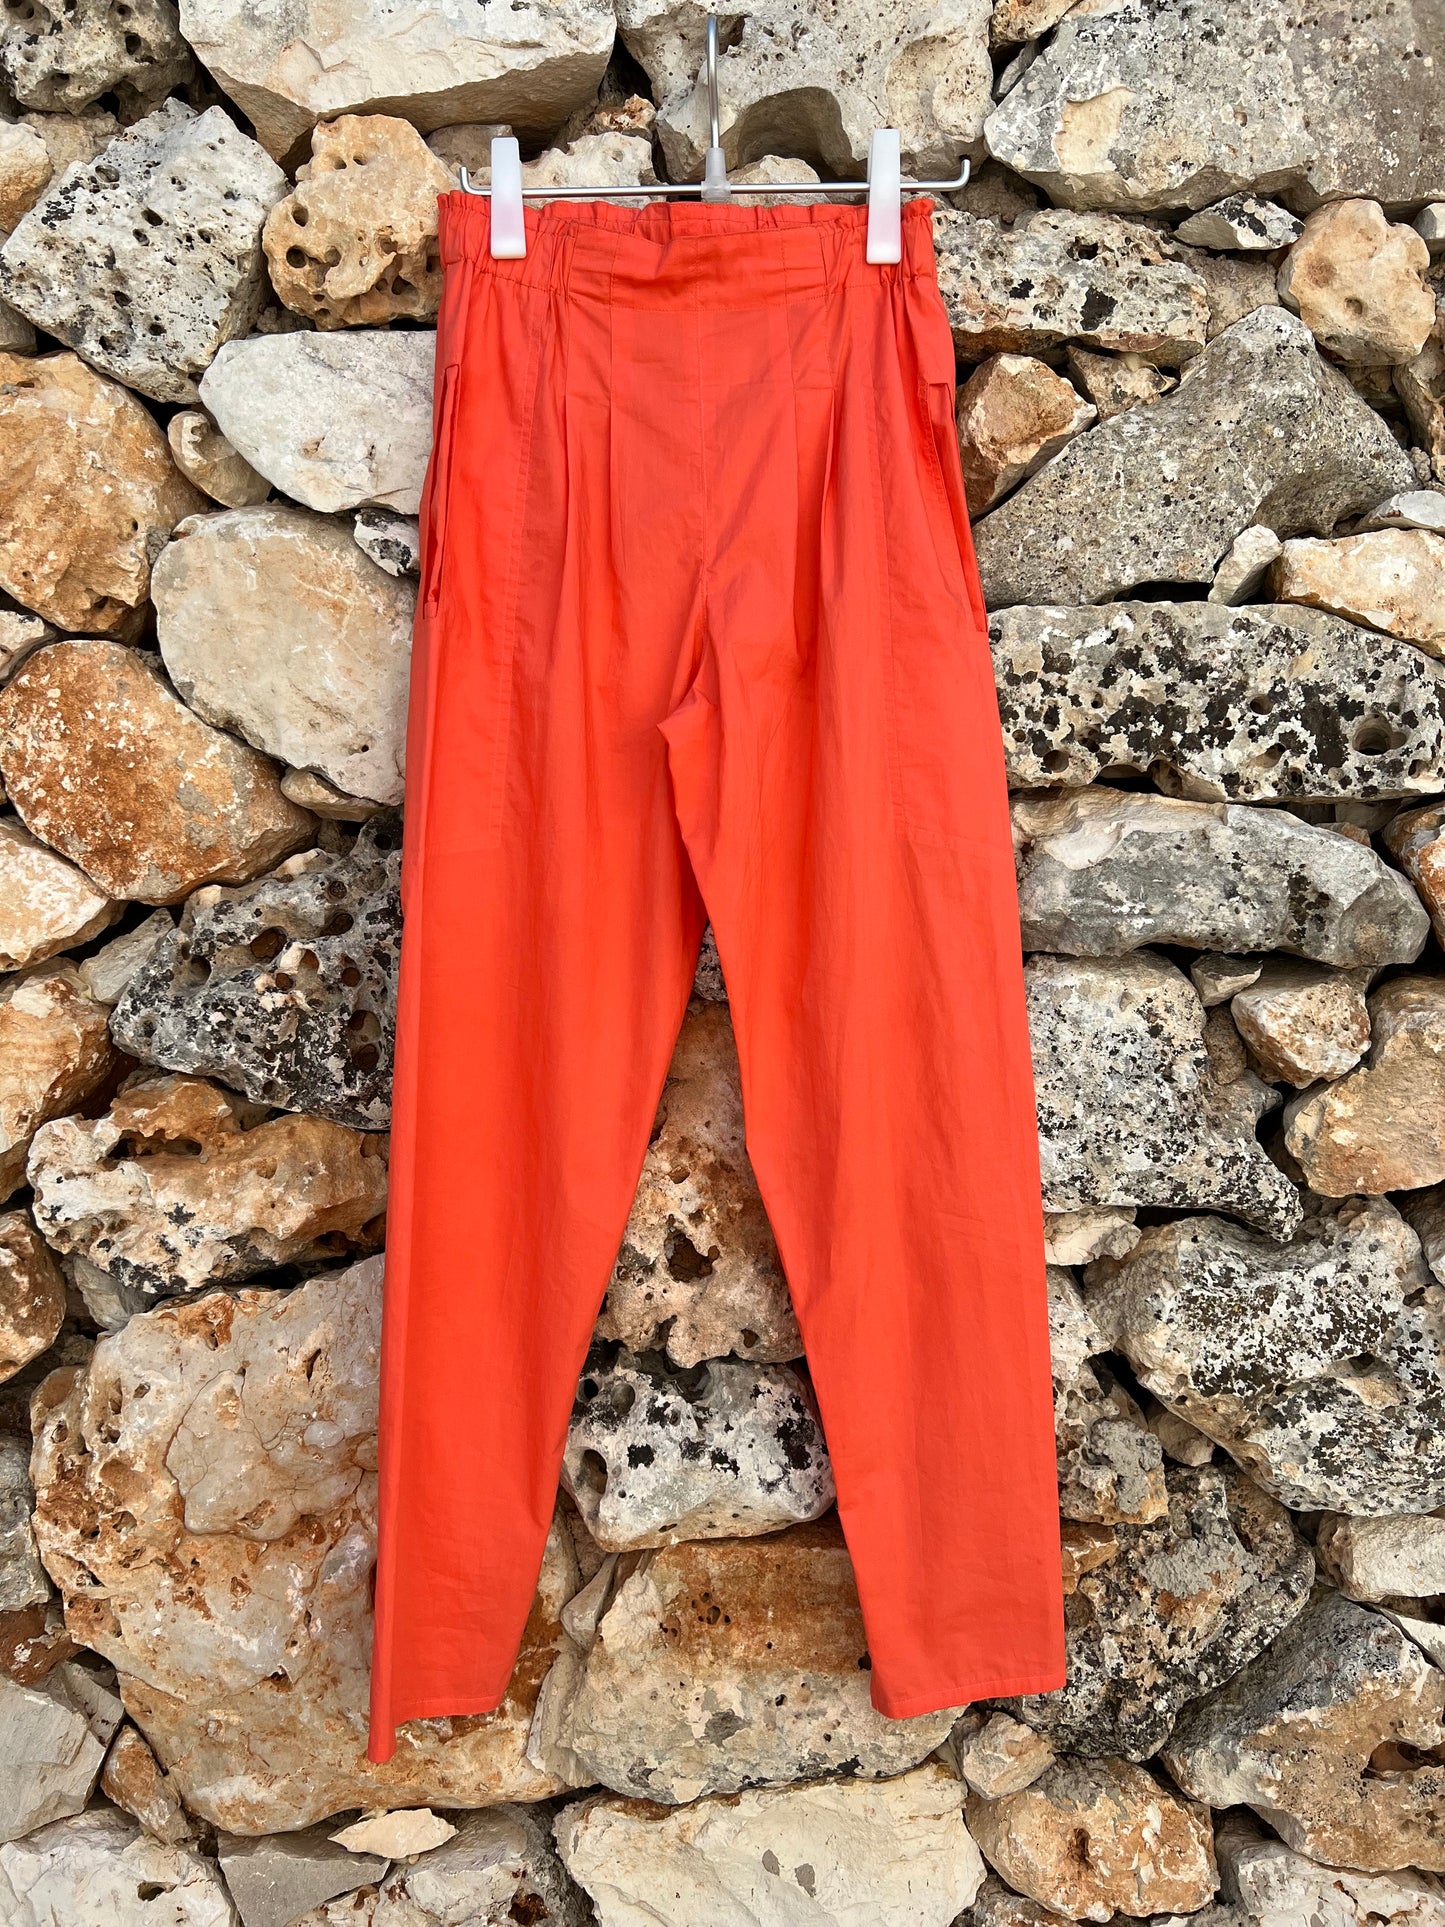 Pants - Opera bright red/orange